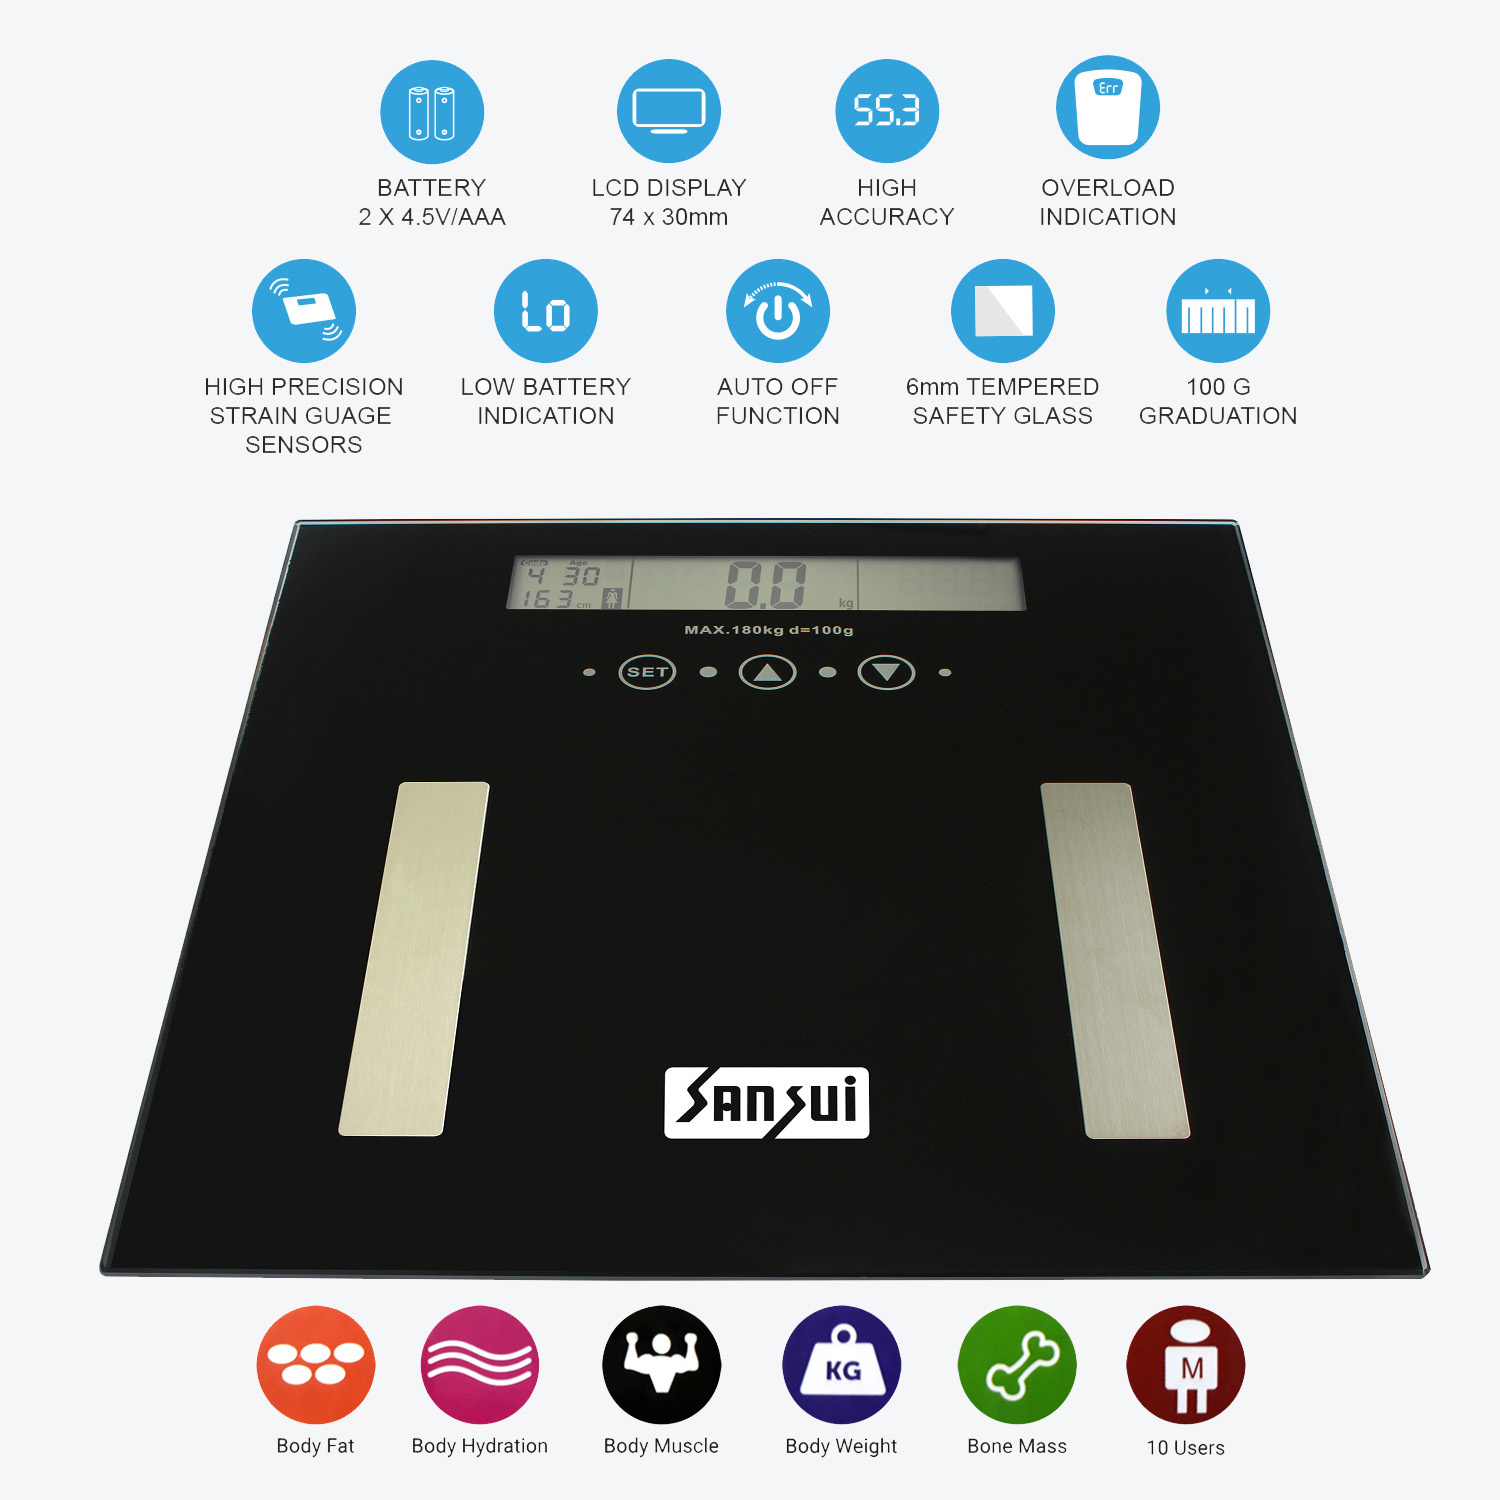 Sansui BMI Personal Scale Manual